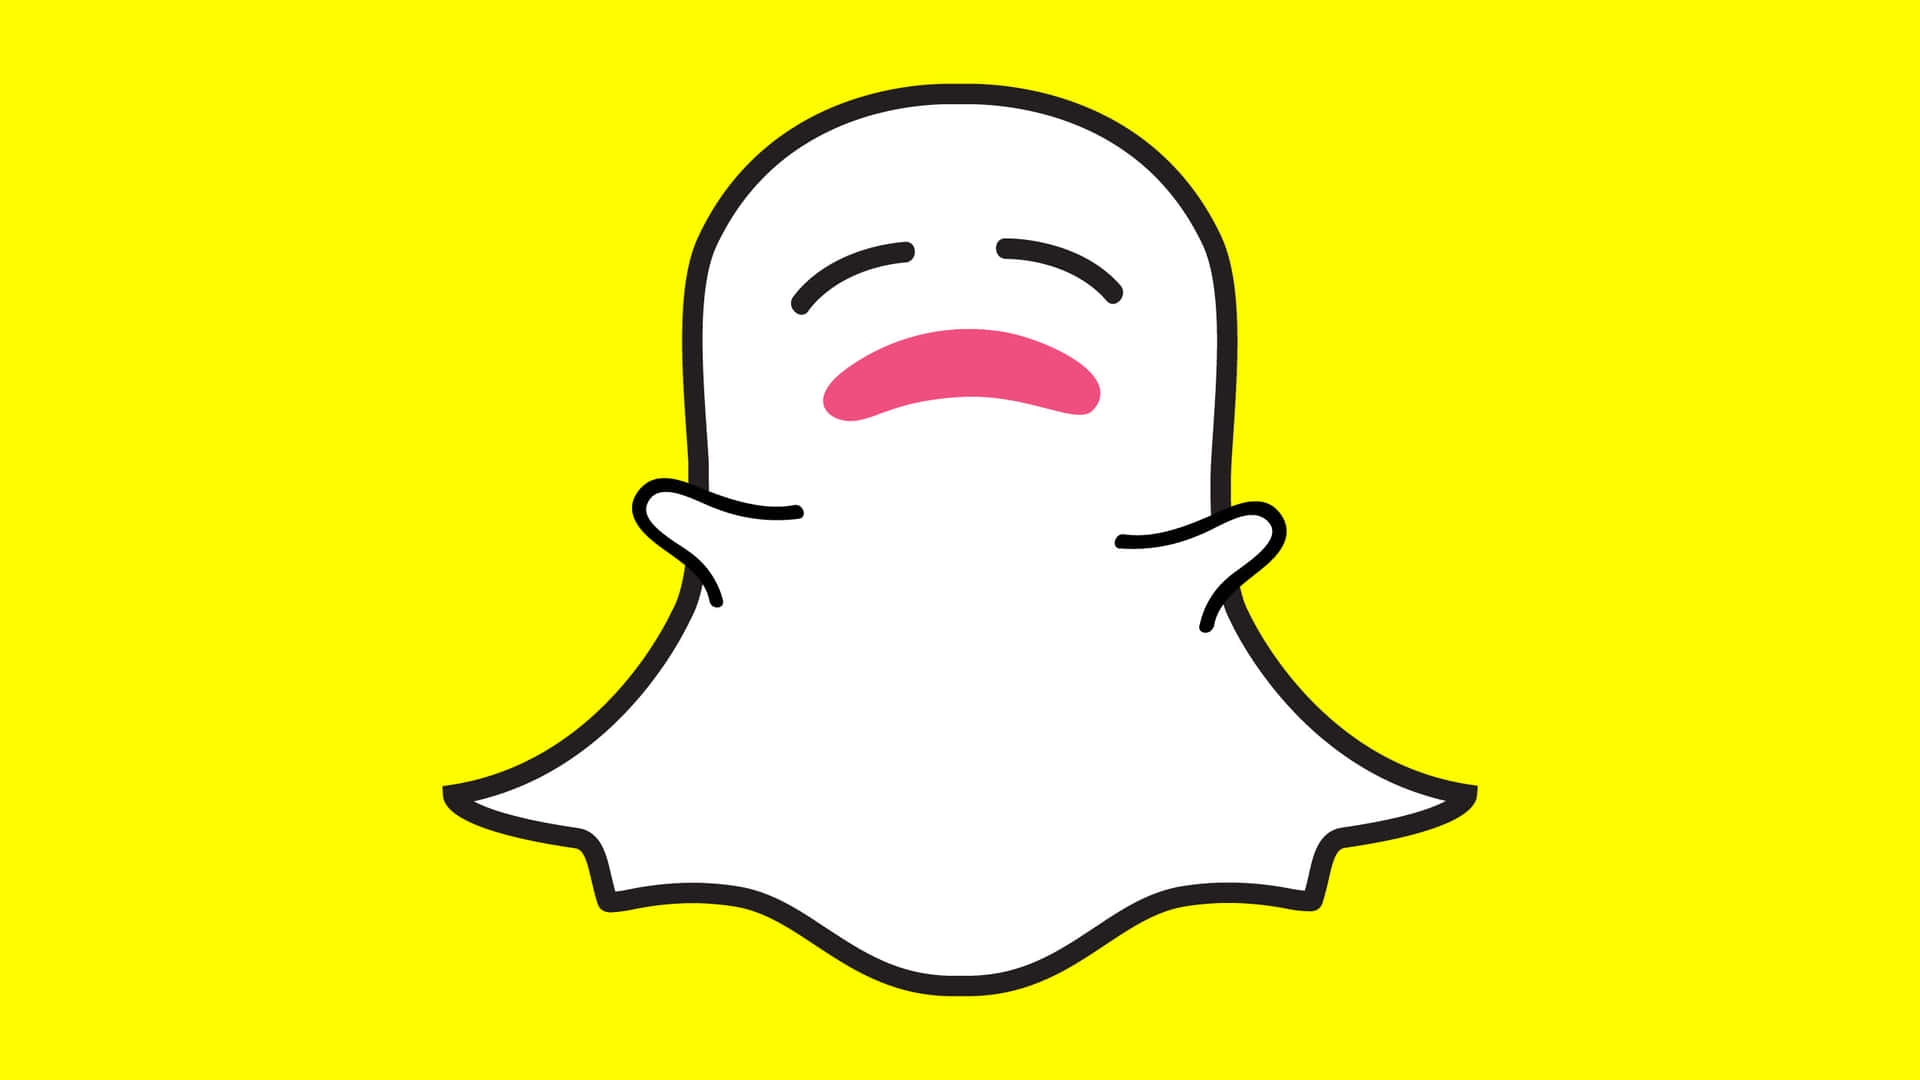 Bleibam Ball Und Folge Uns Auf Snapchat!